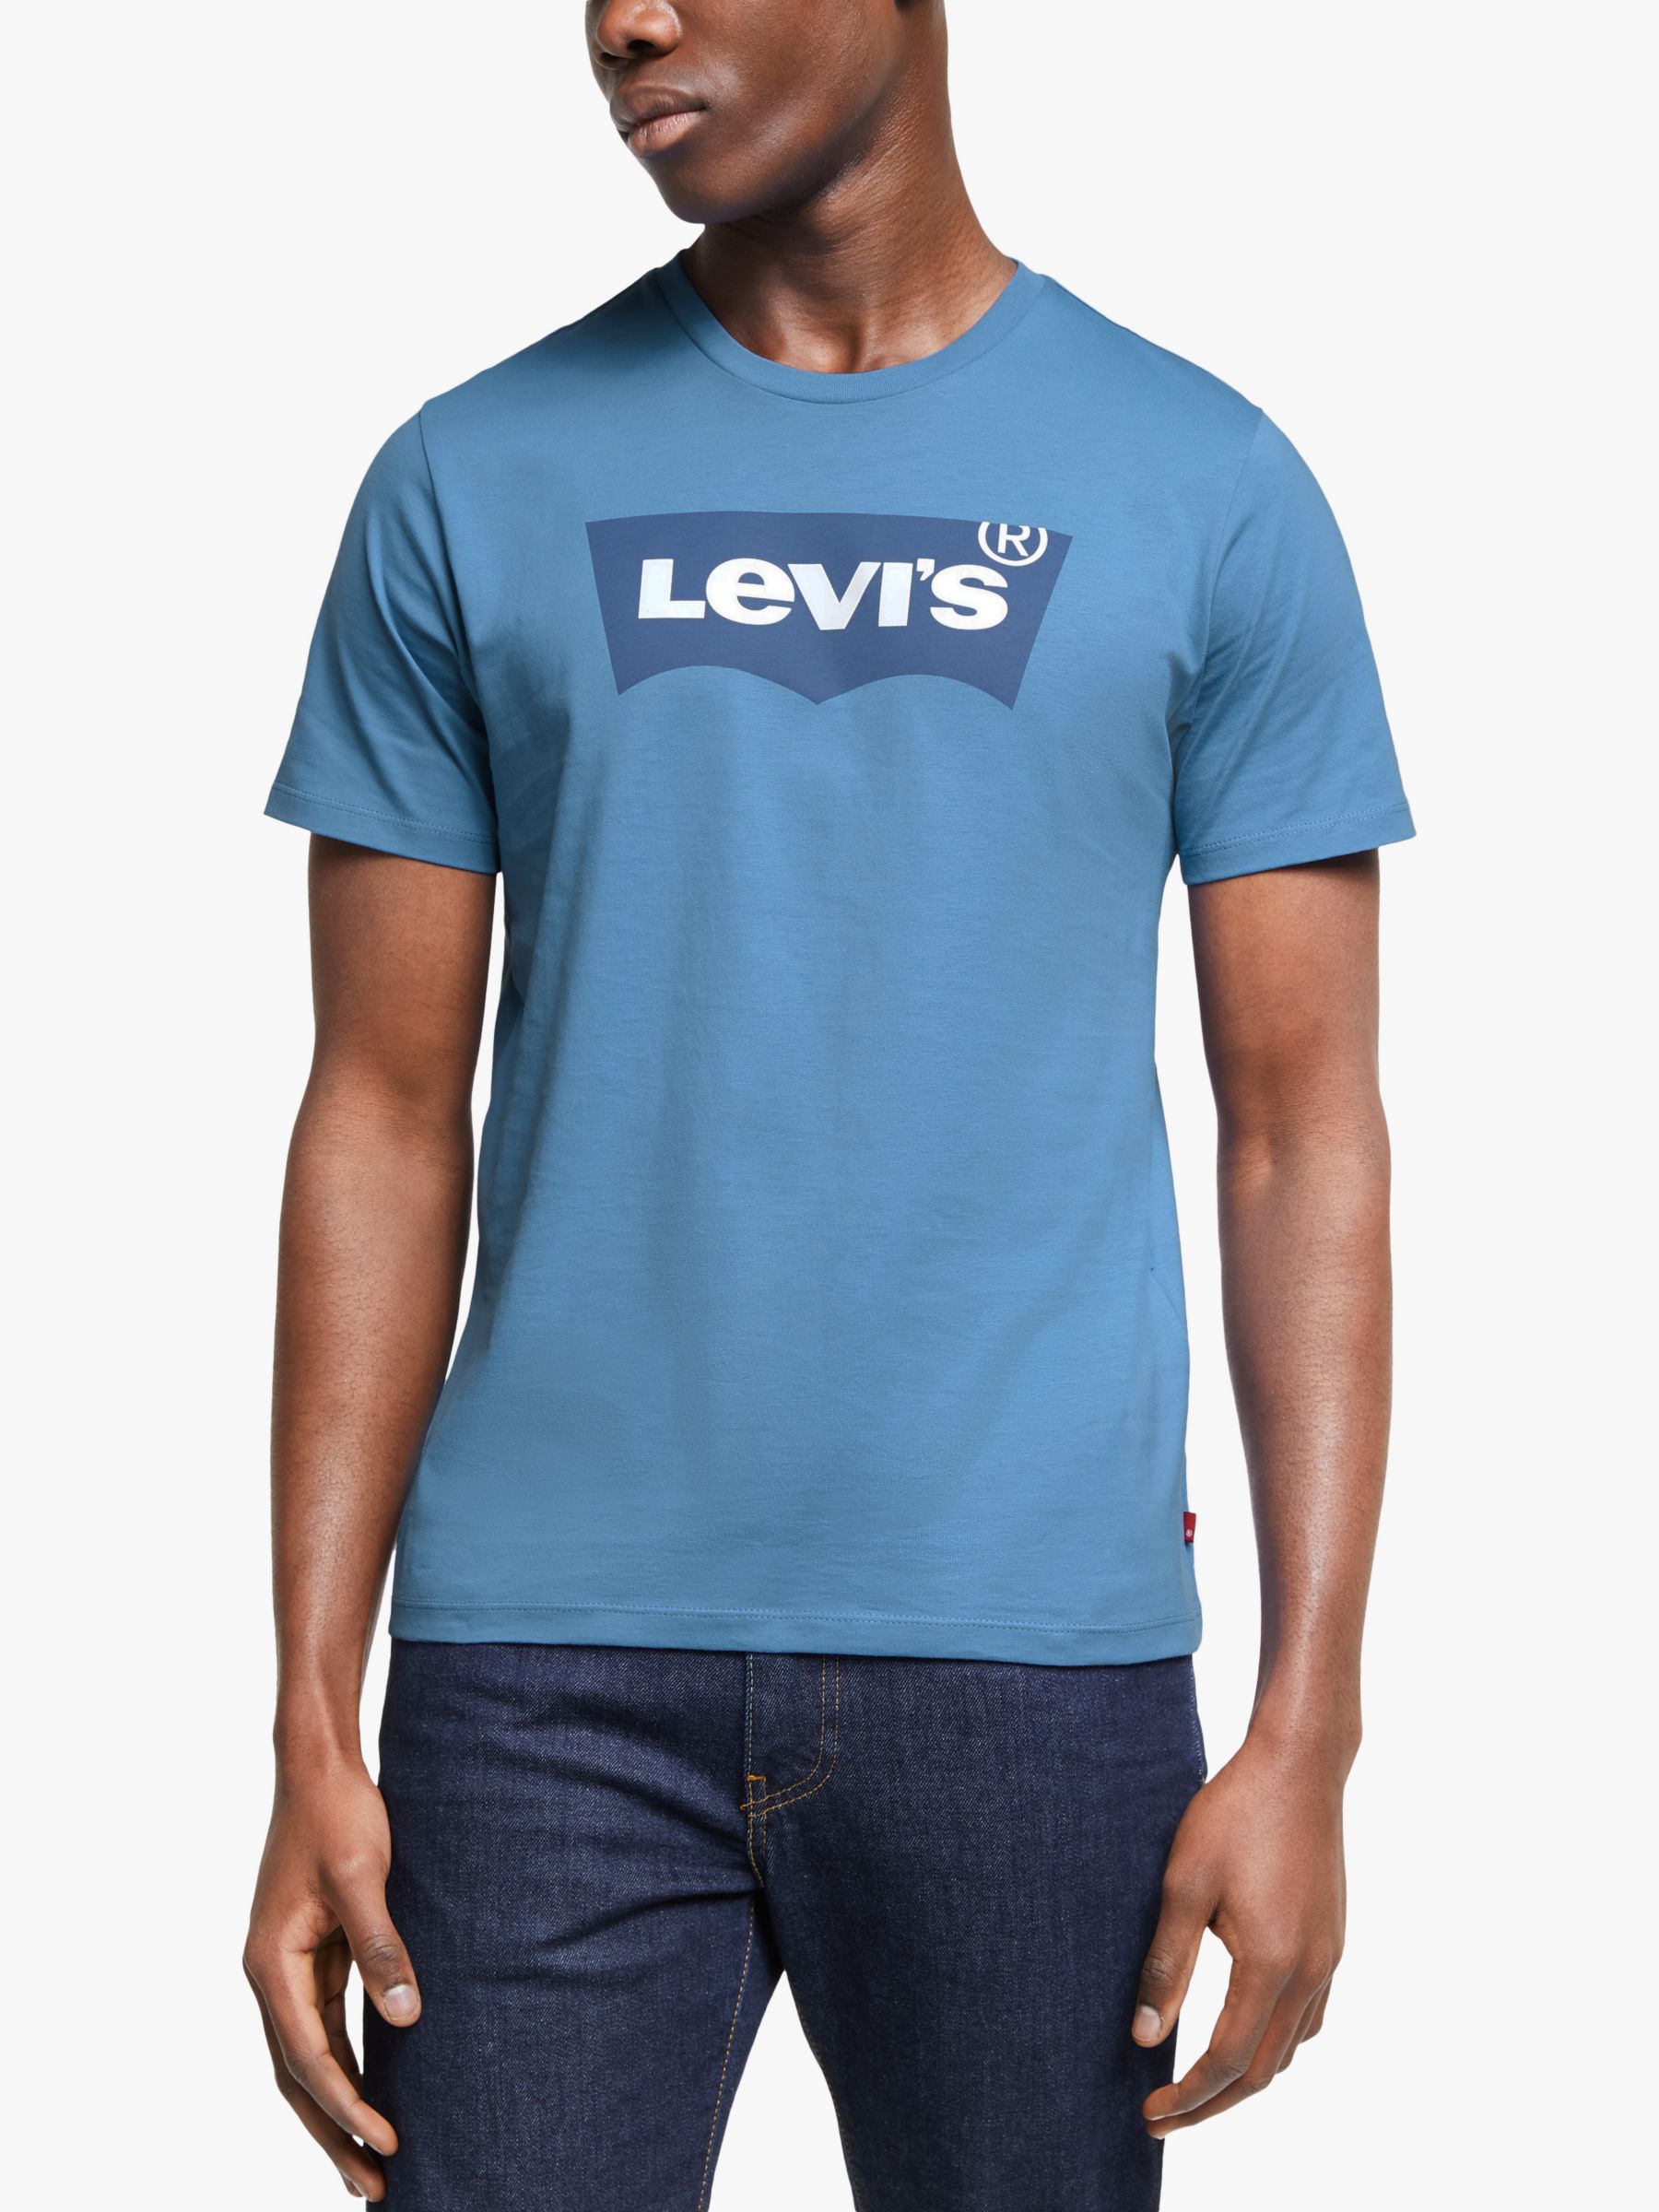 Levi's Housemark Graphic T-Shirt, Blue 